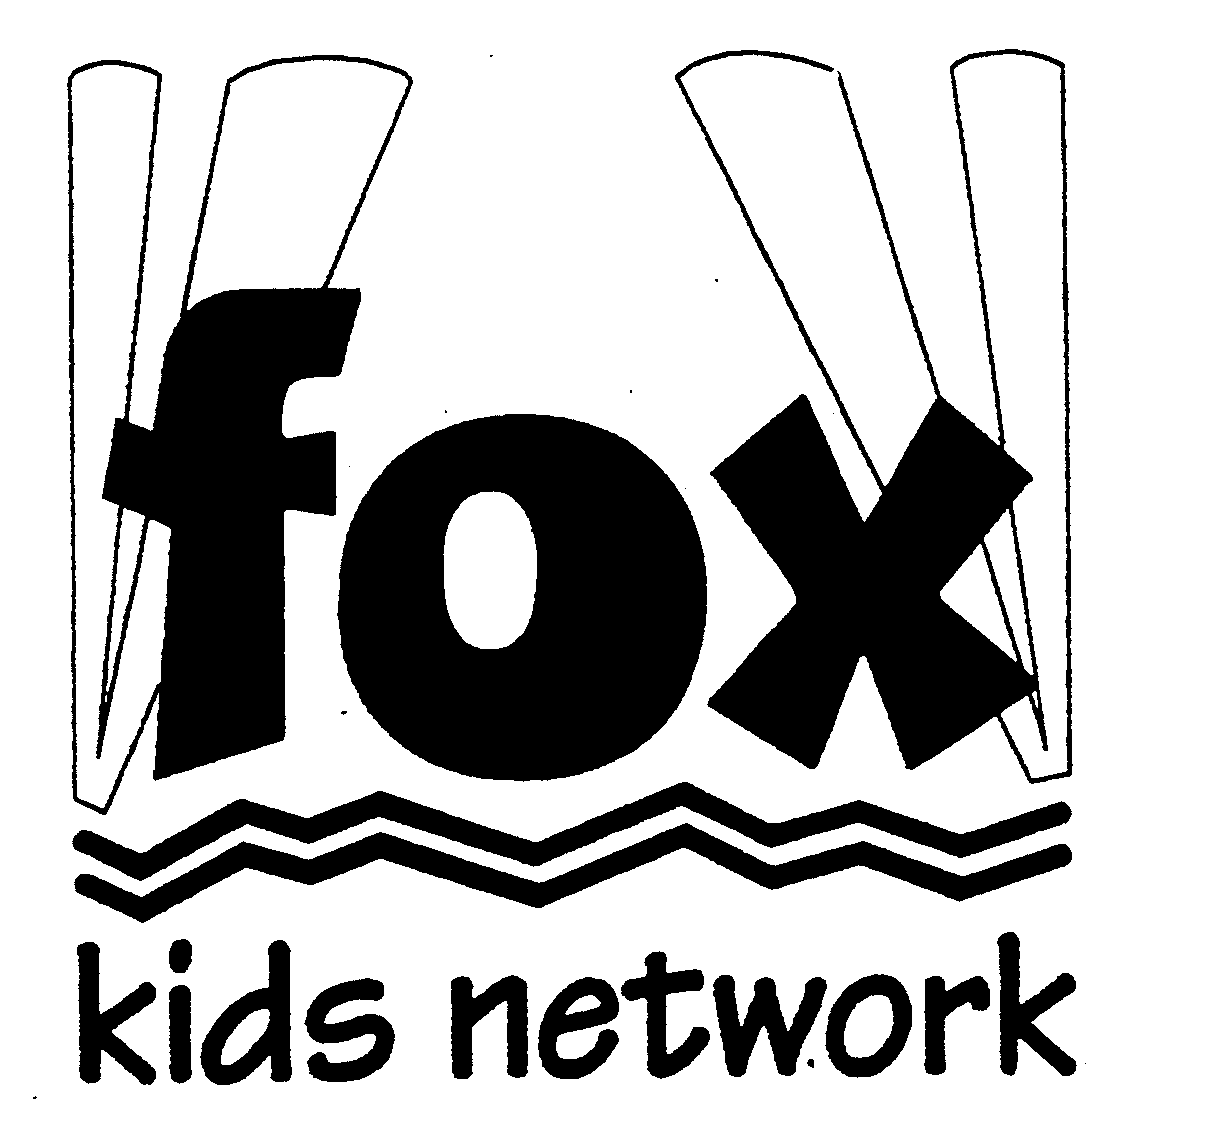 FOX KIDS NETWORK